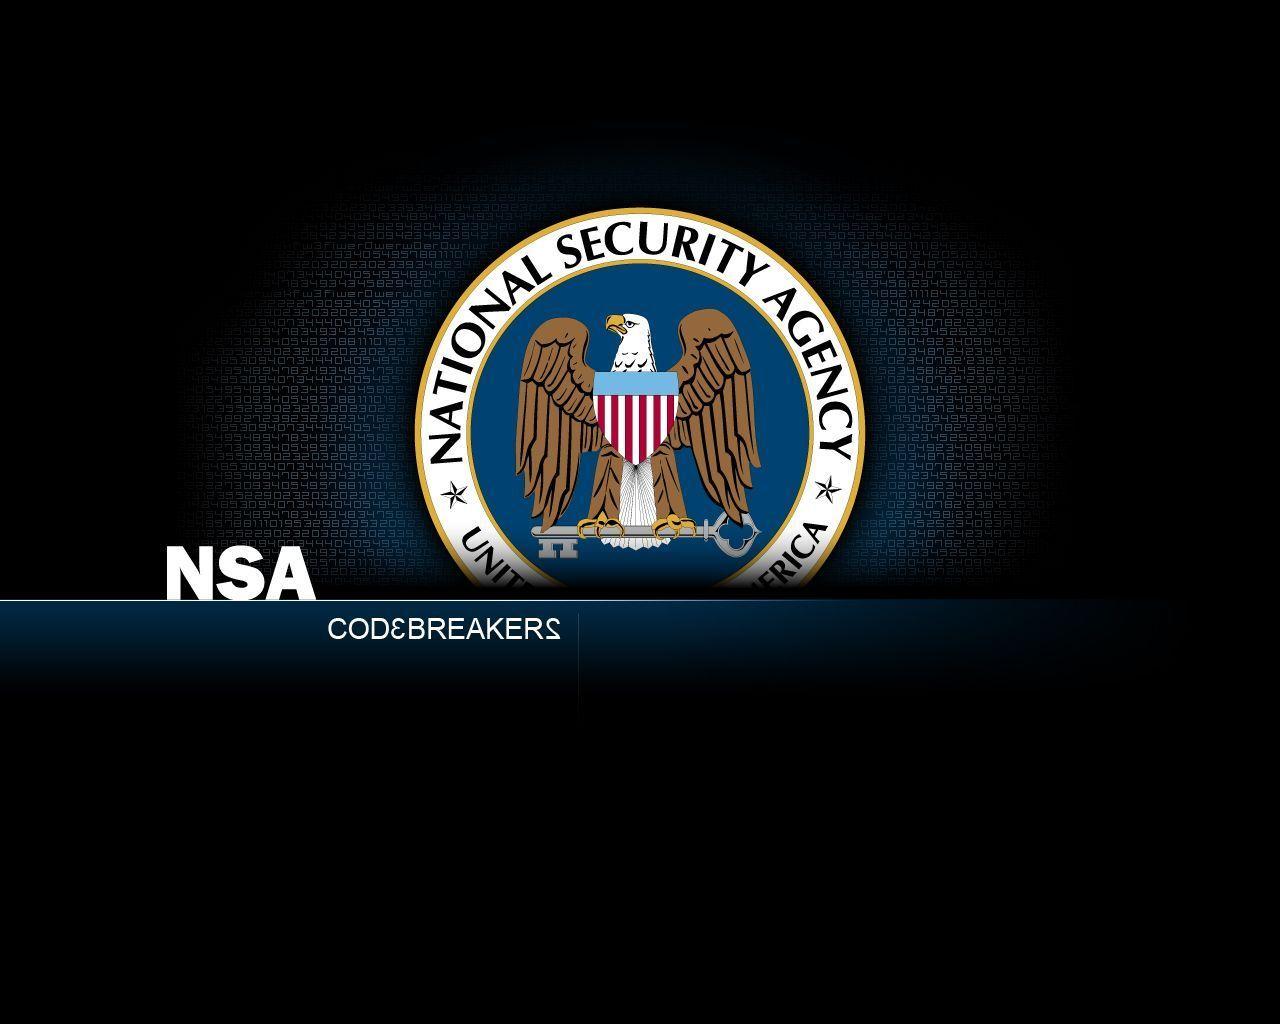 84+] National Security Agency Wallpapers - WallpaperSafari